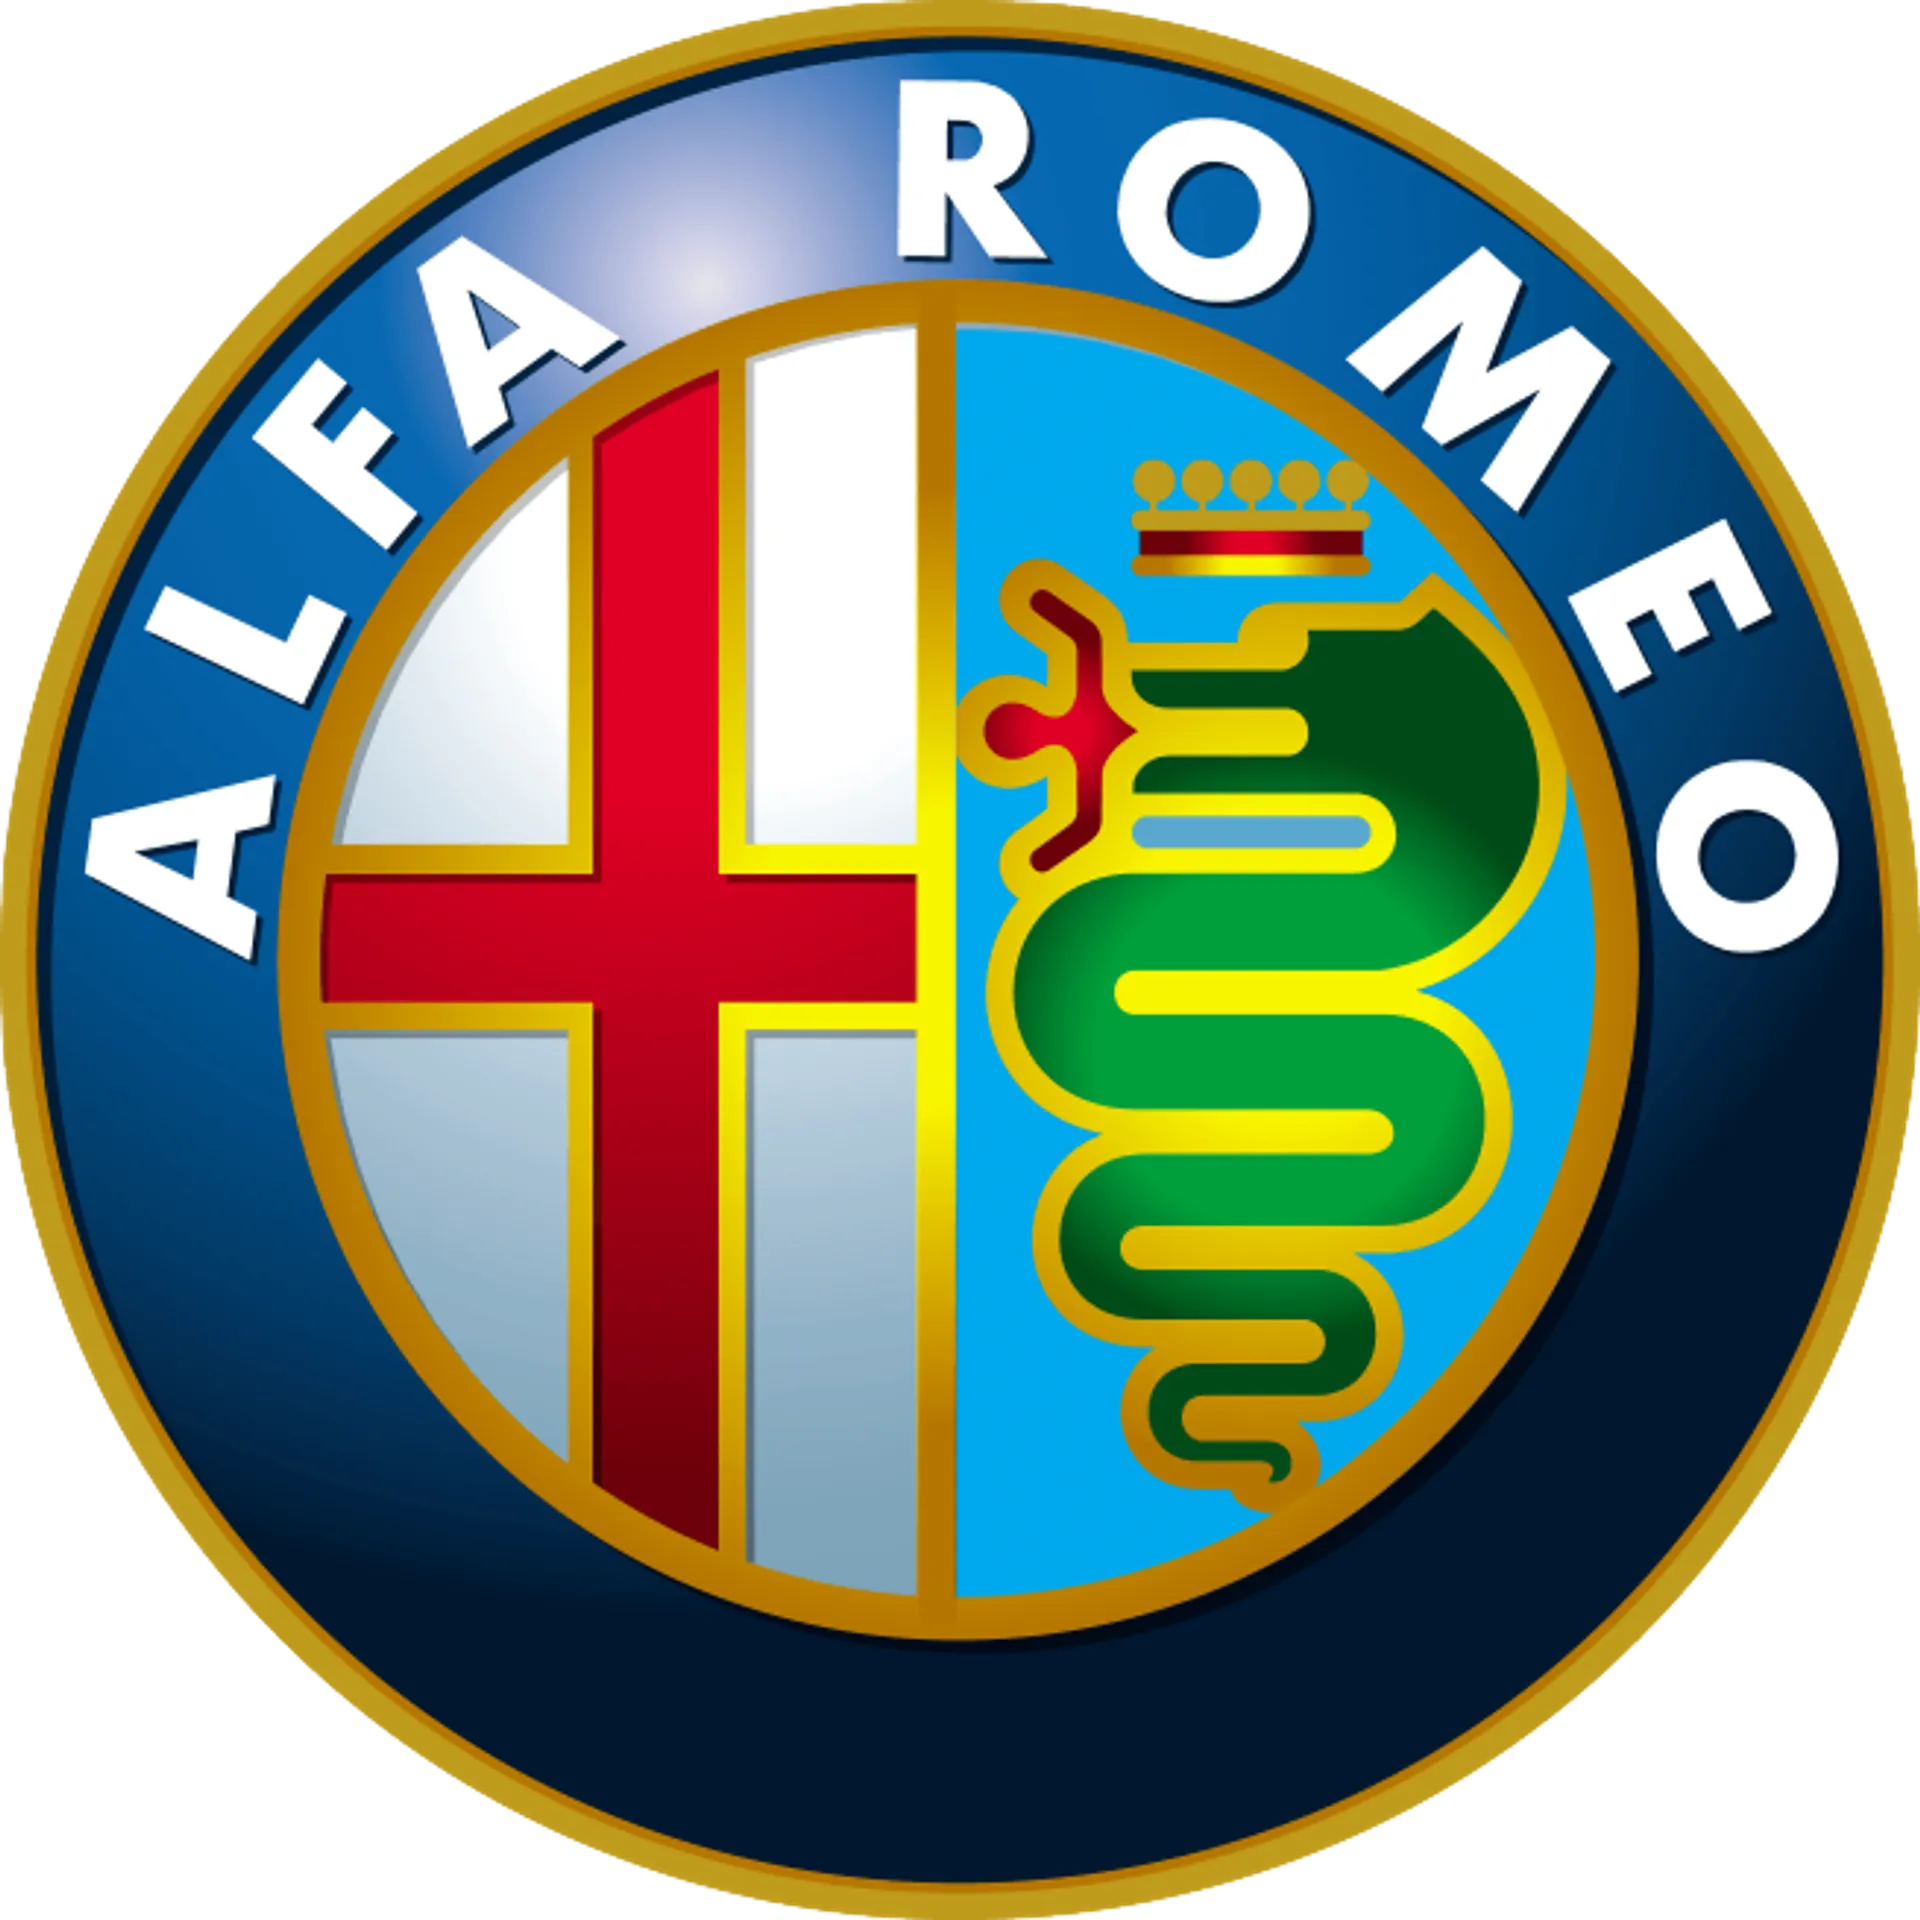 ALFA ROMEO logo die aktuell Flugblatt